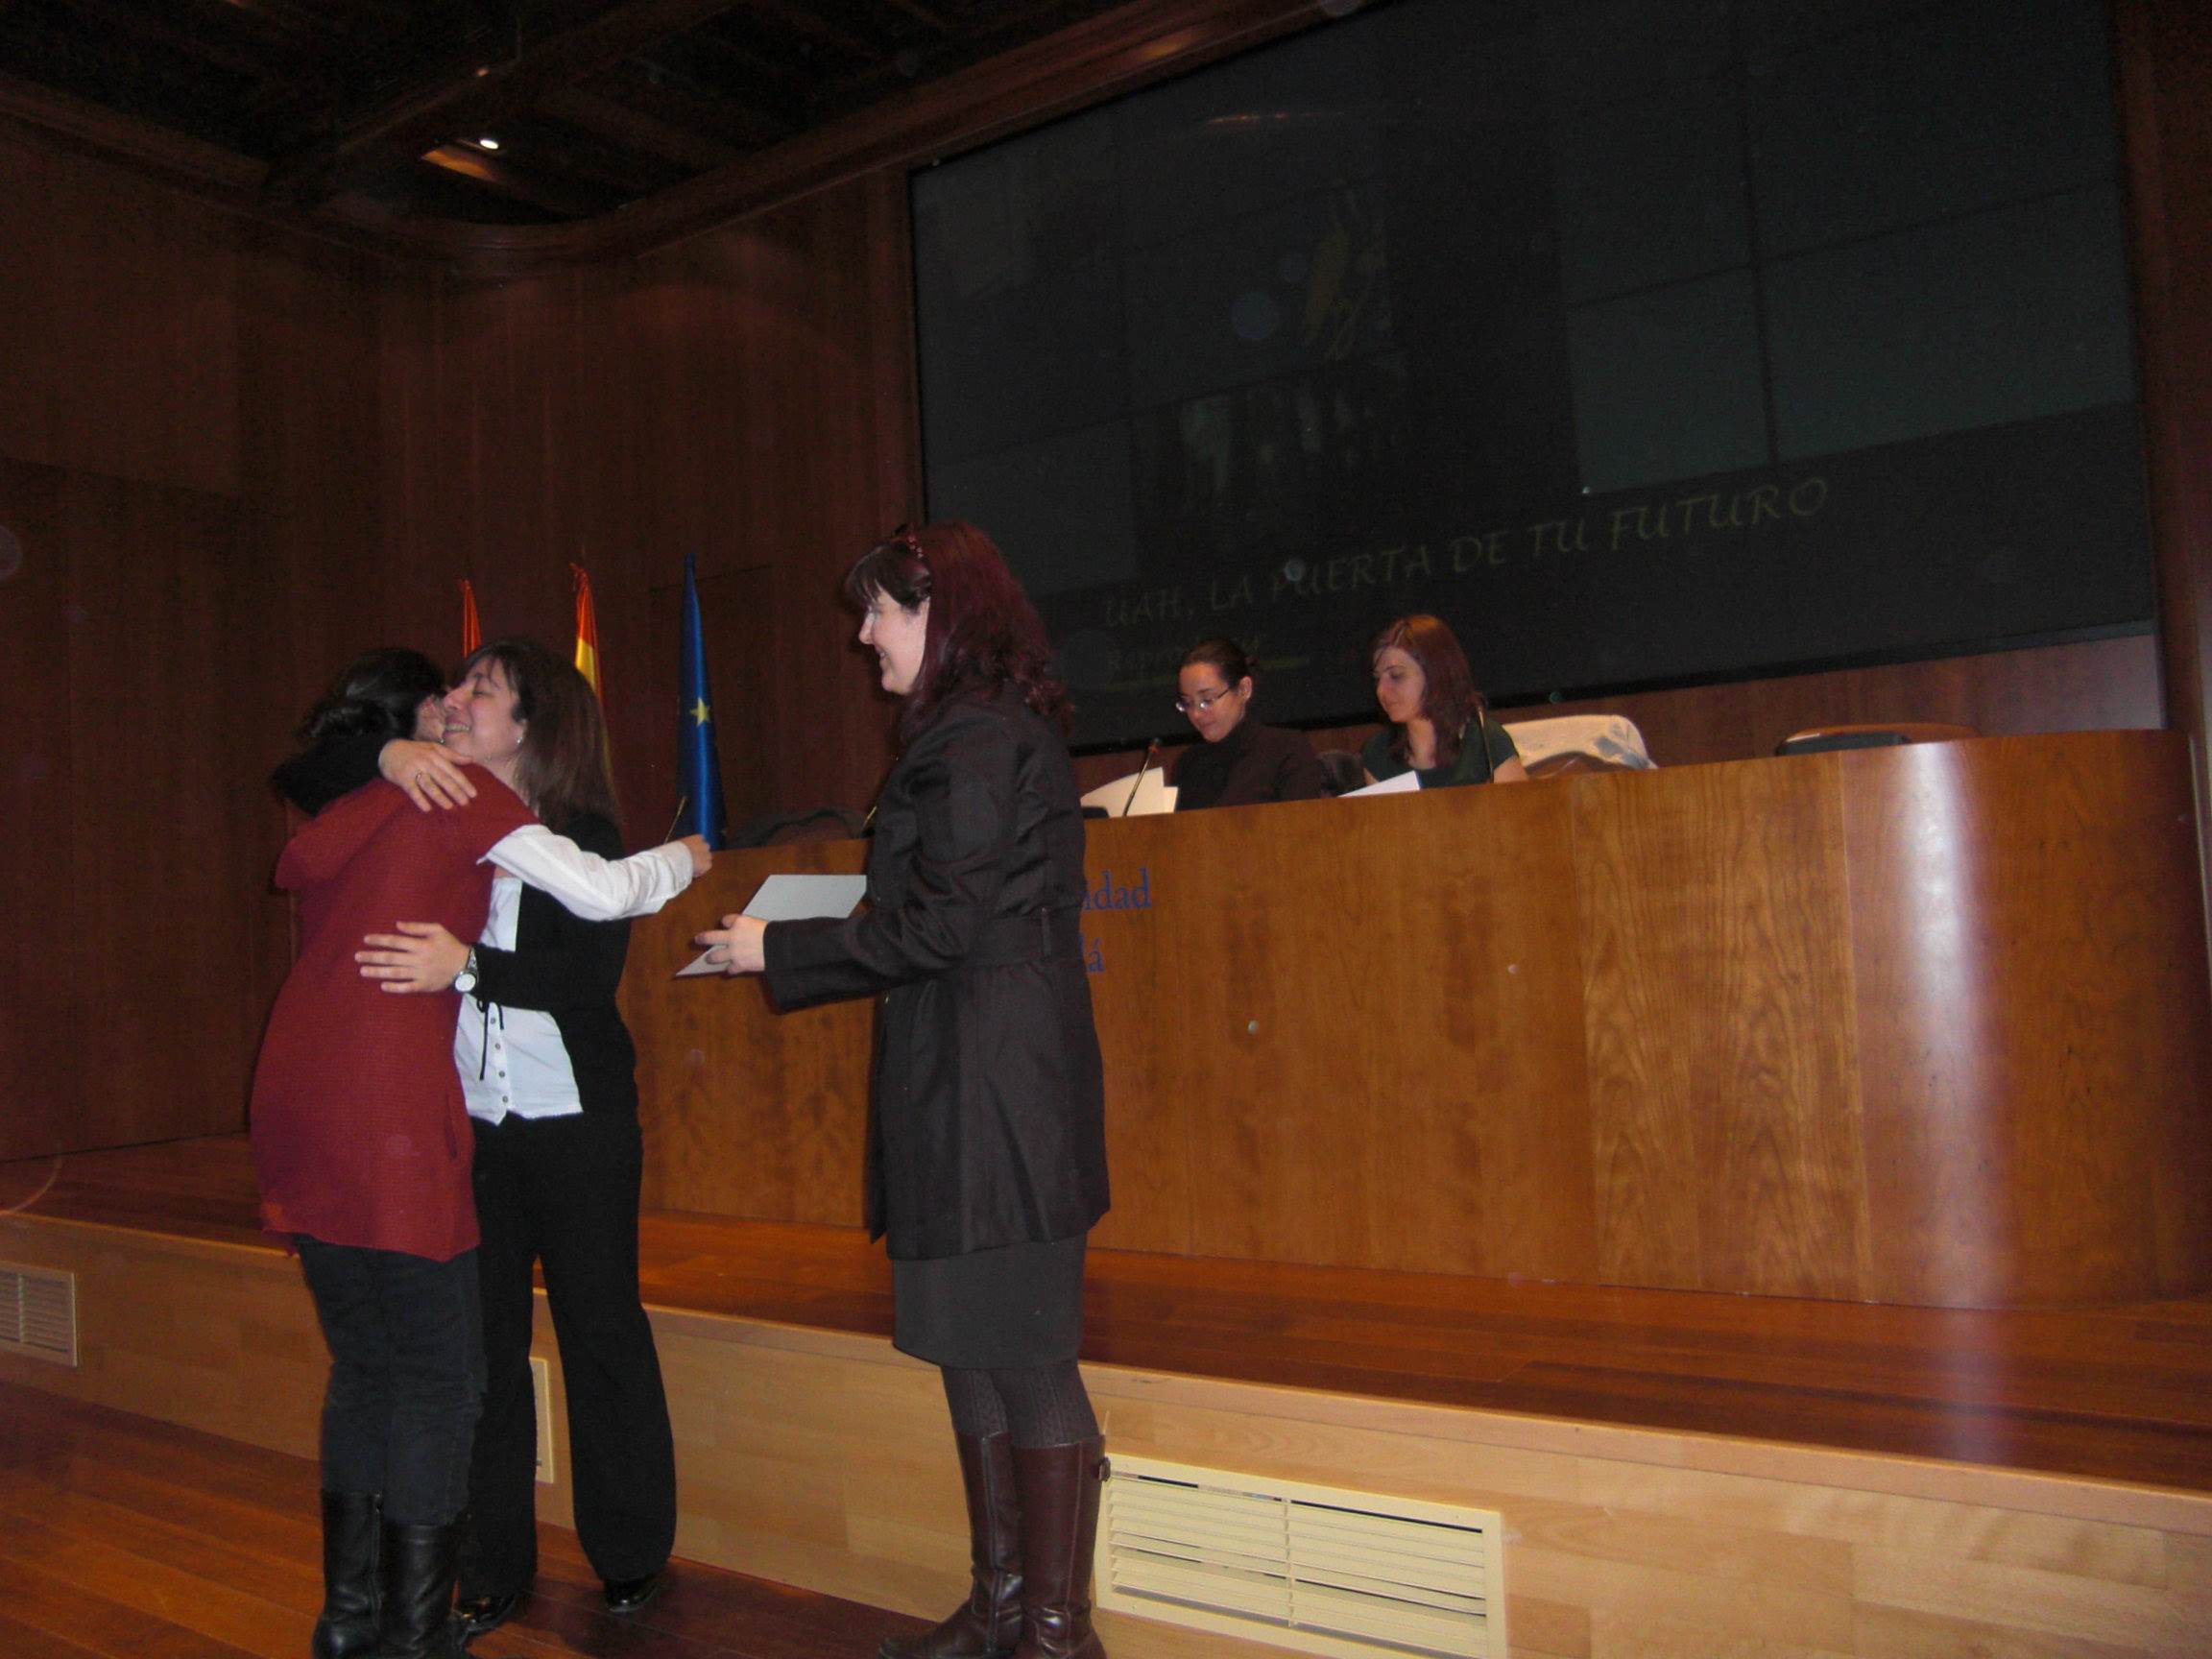 Closing ceremony (winter 2010)